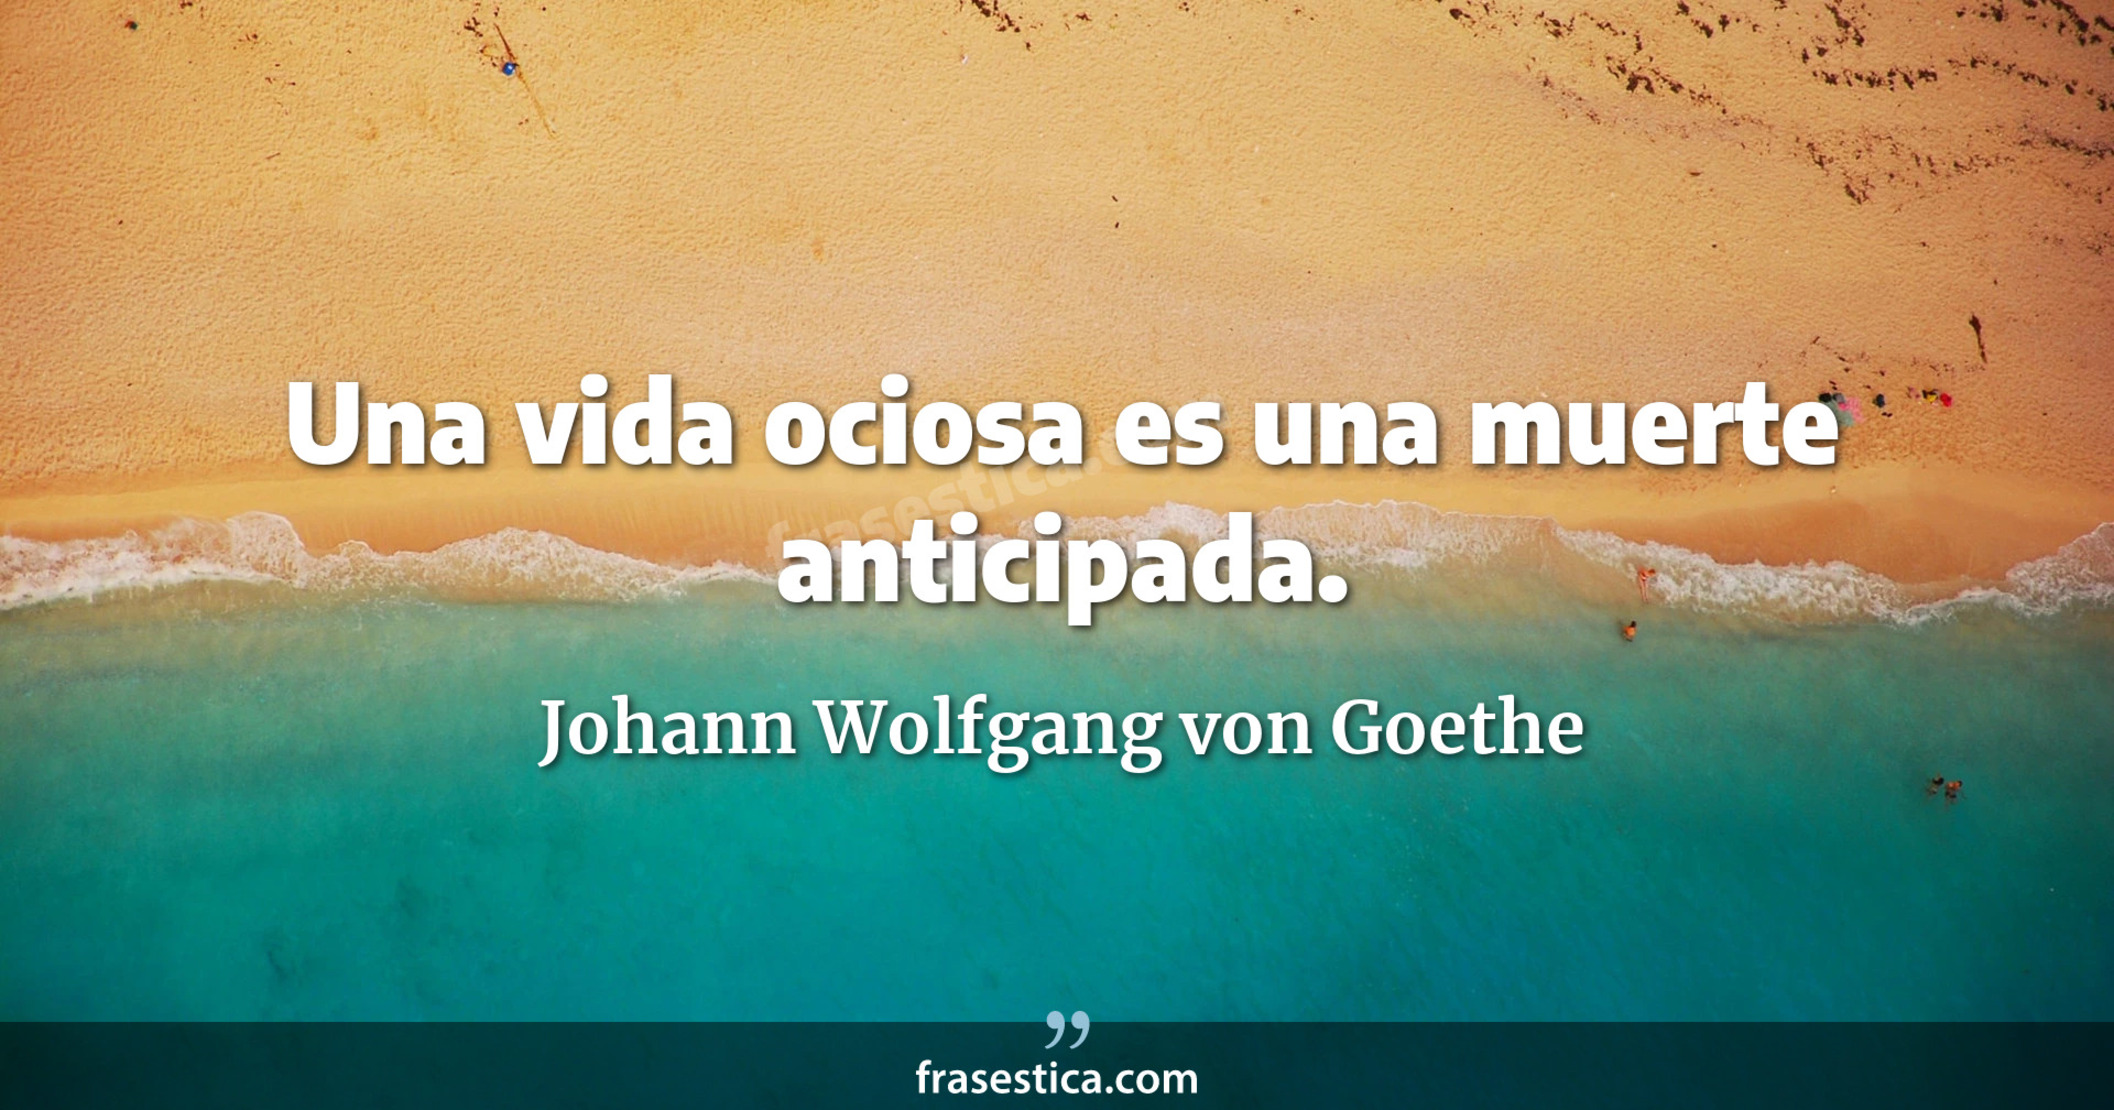 Una vida ociosa es una muerte anticipada. - Johann Wolfgang von Goethe